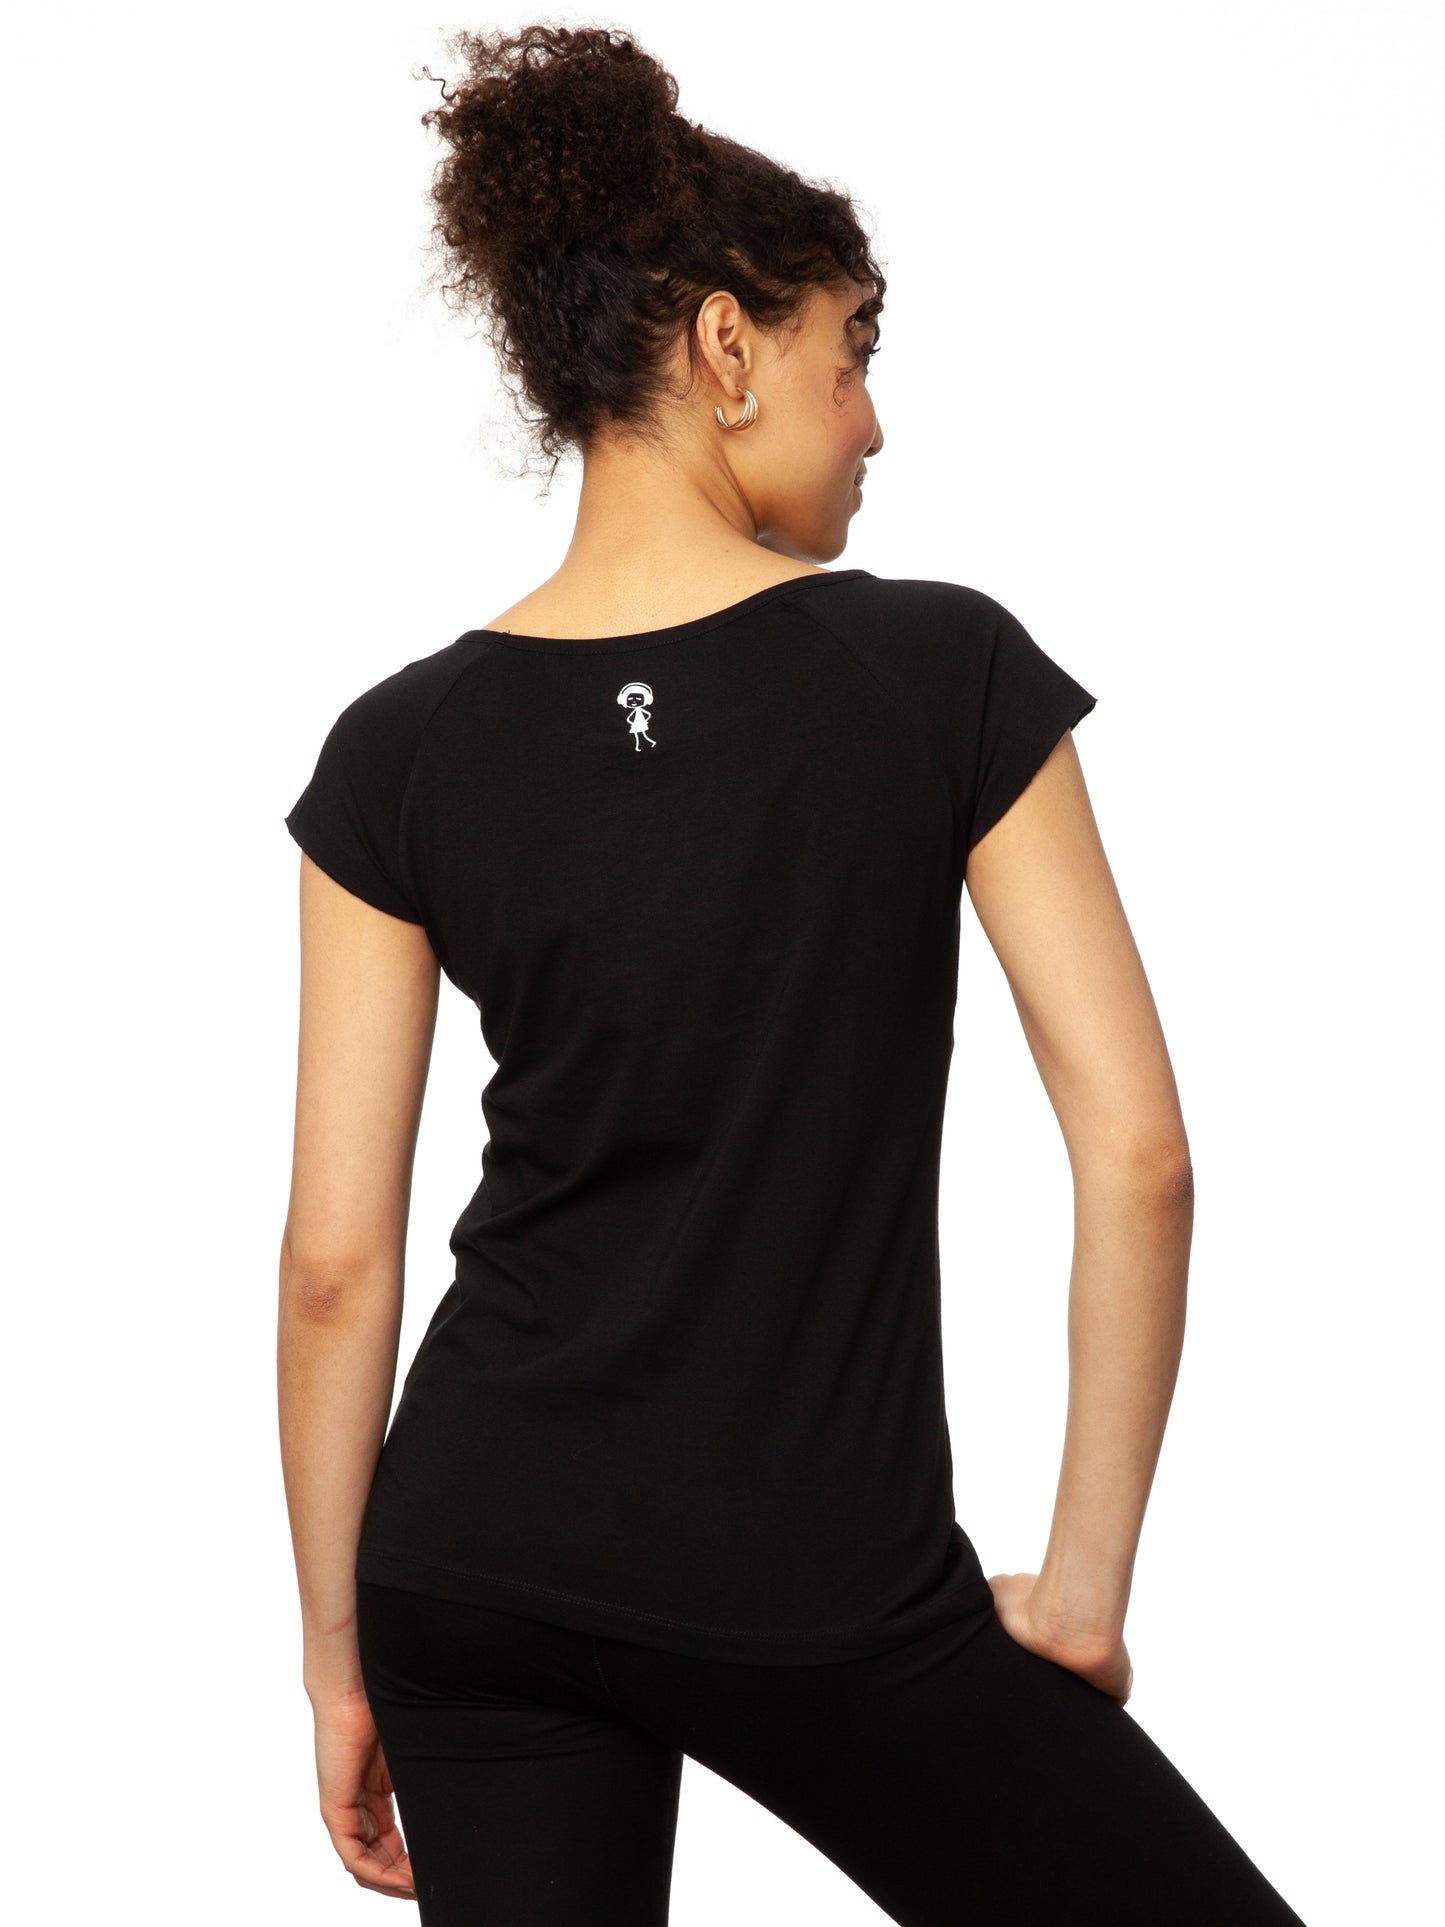 Yoga girl Cap Sleeve black 